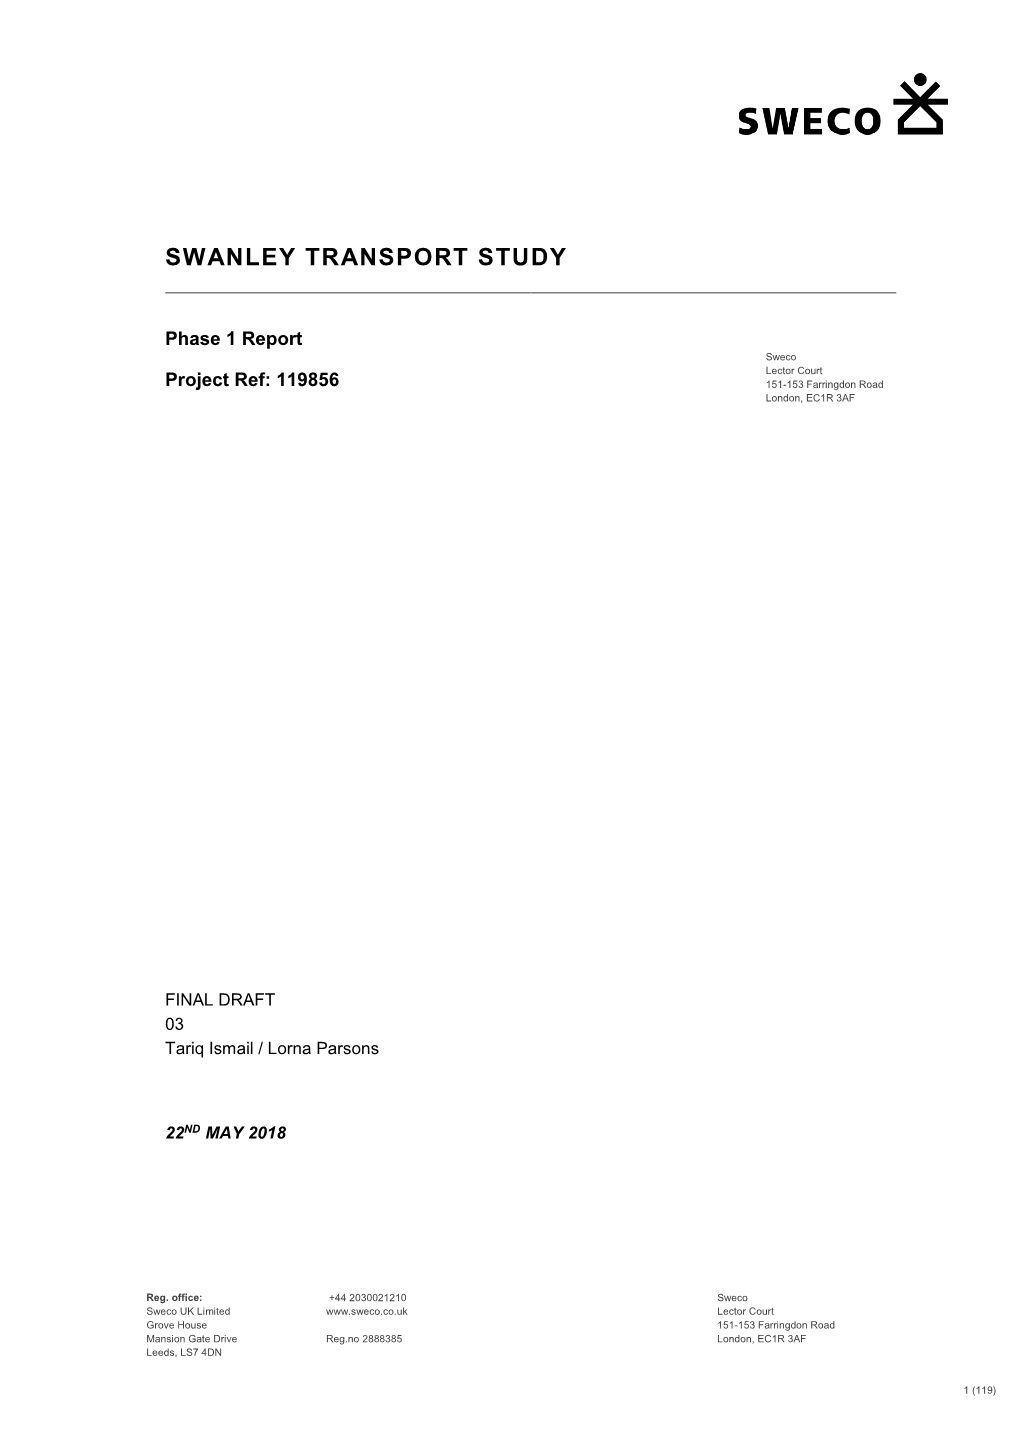 Swanley Transport Study